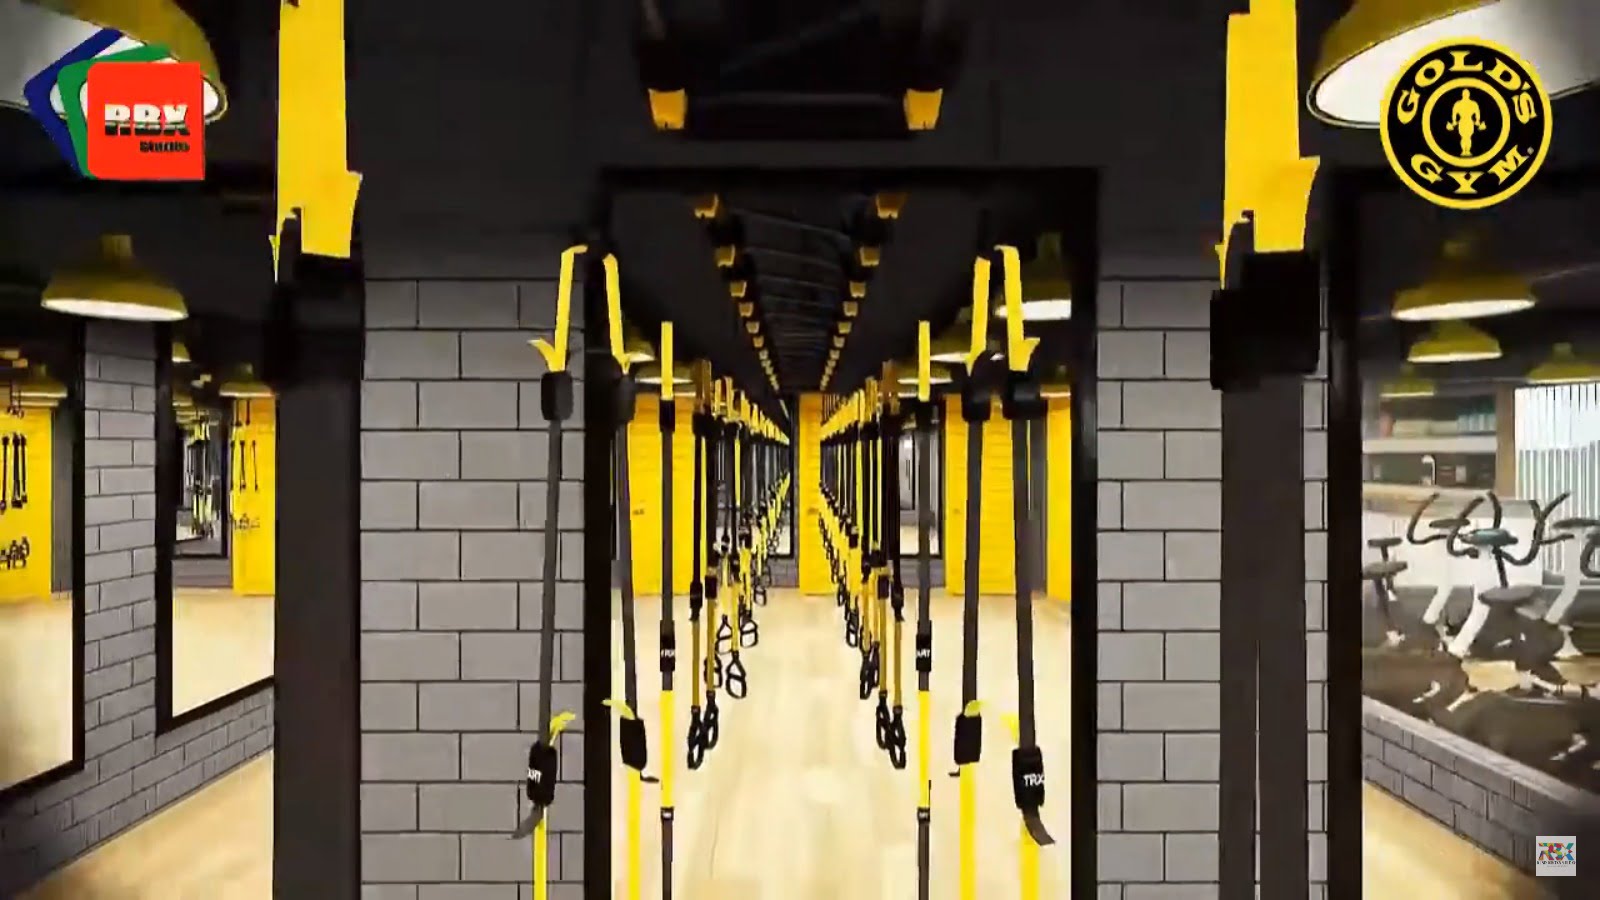 Gold's Gym 3d rendering by rbxstudio